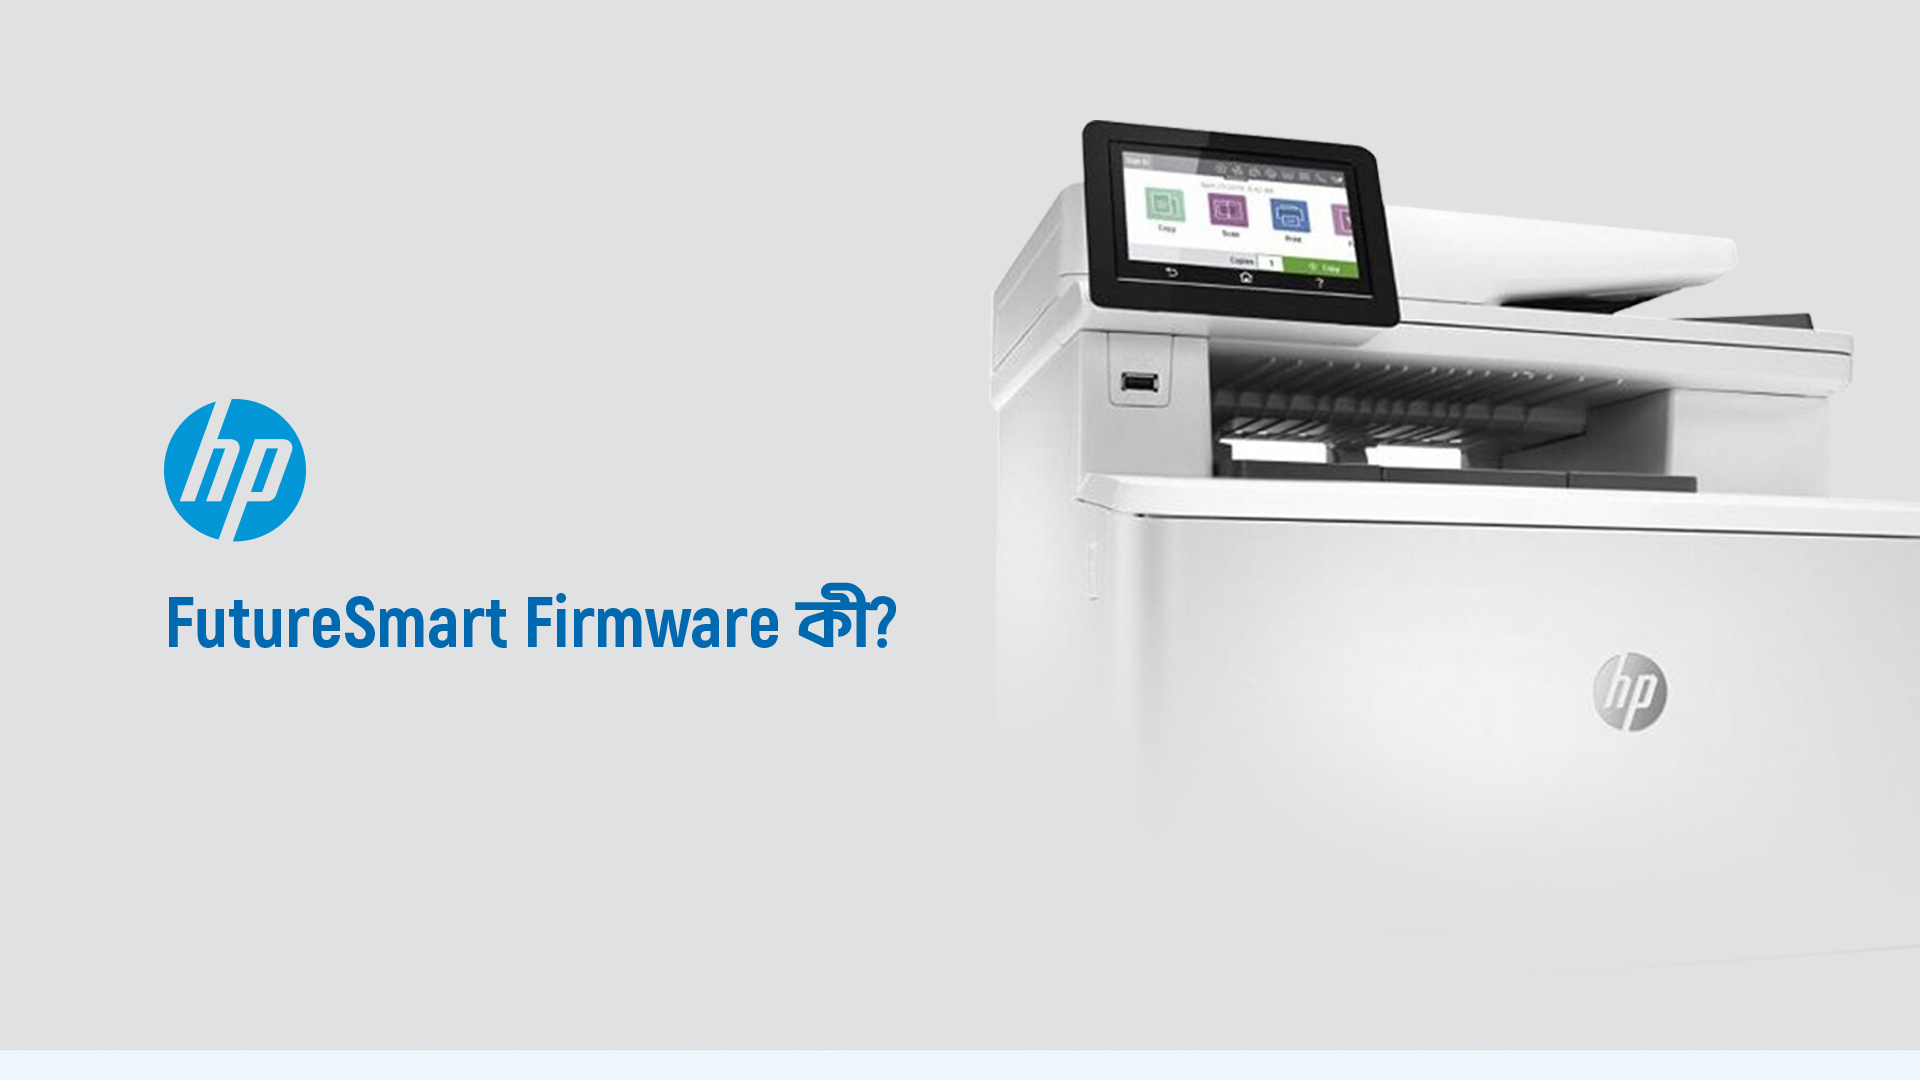 HP FutureSmart Firmware কী? HP FutureSmart Firmware এর ফিচারসমূহ জেনে নিন।